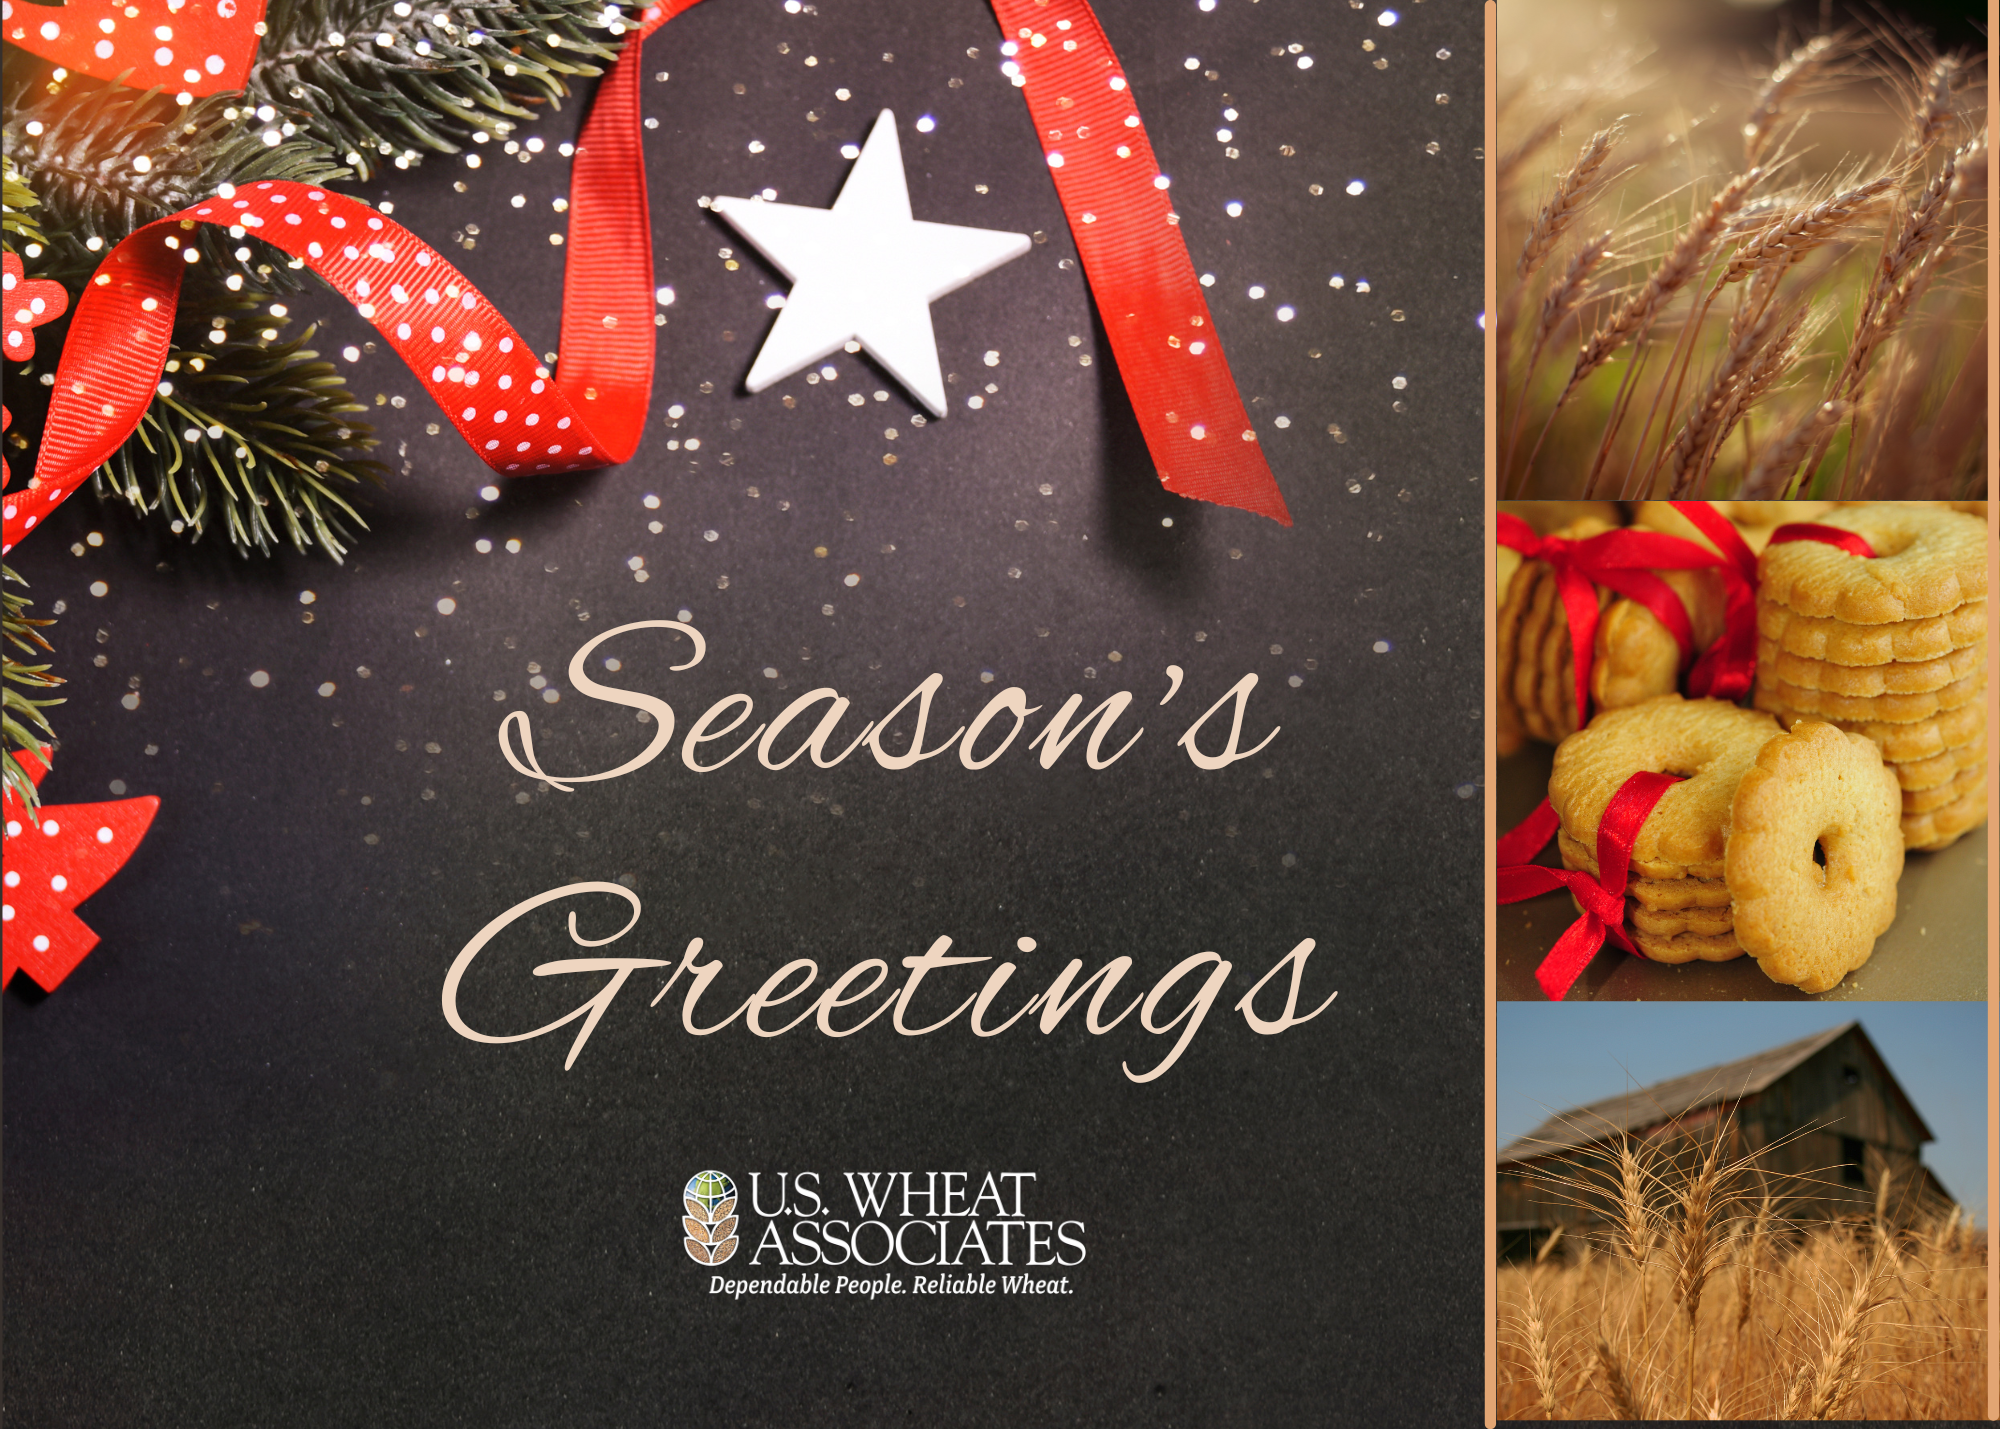 Season's Greetings holiday card from USW.